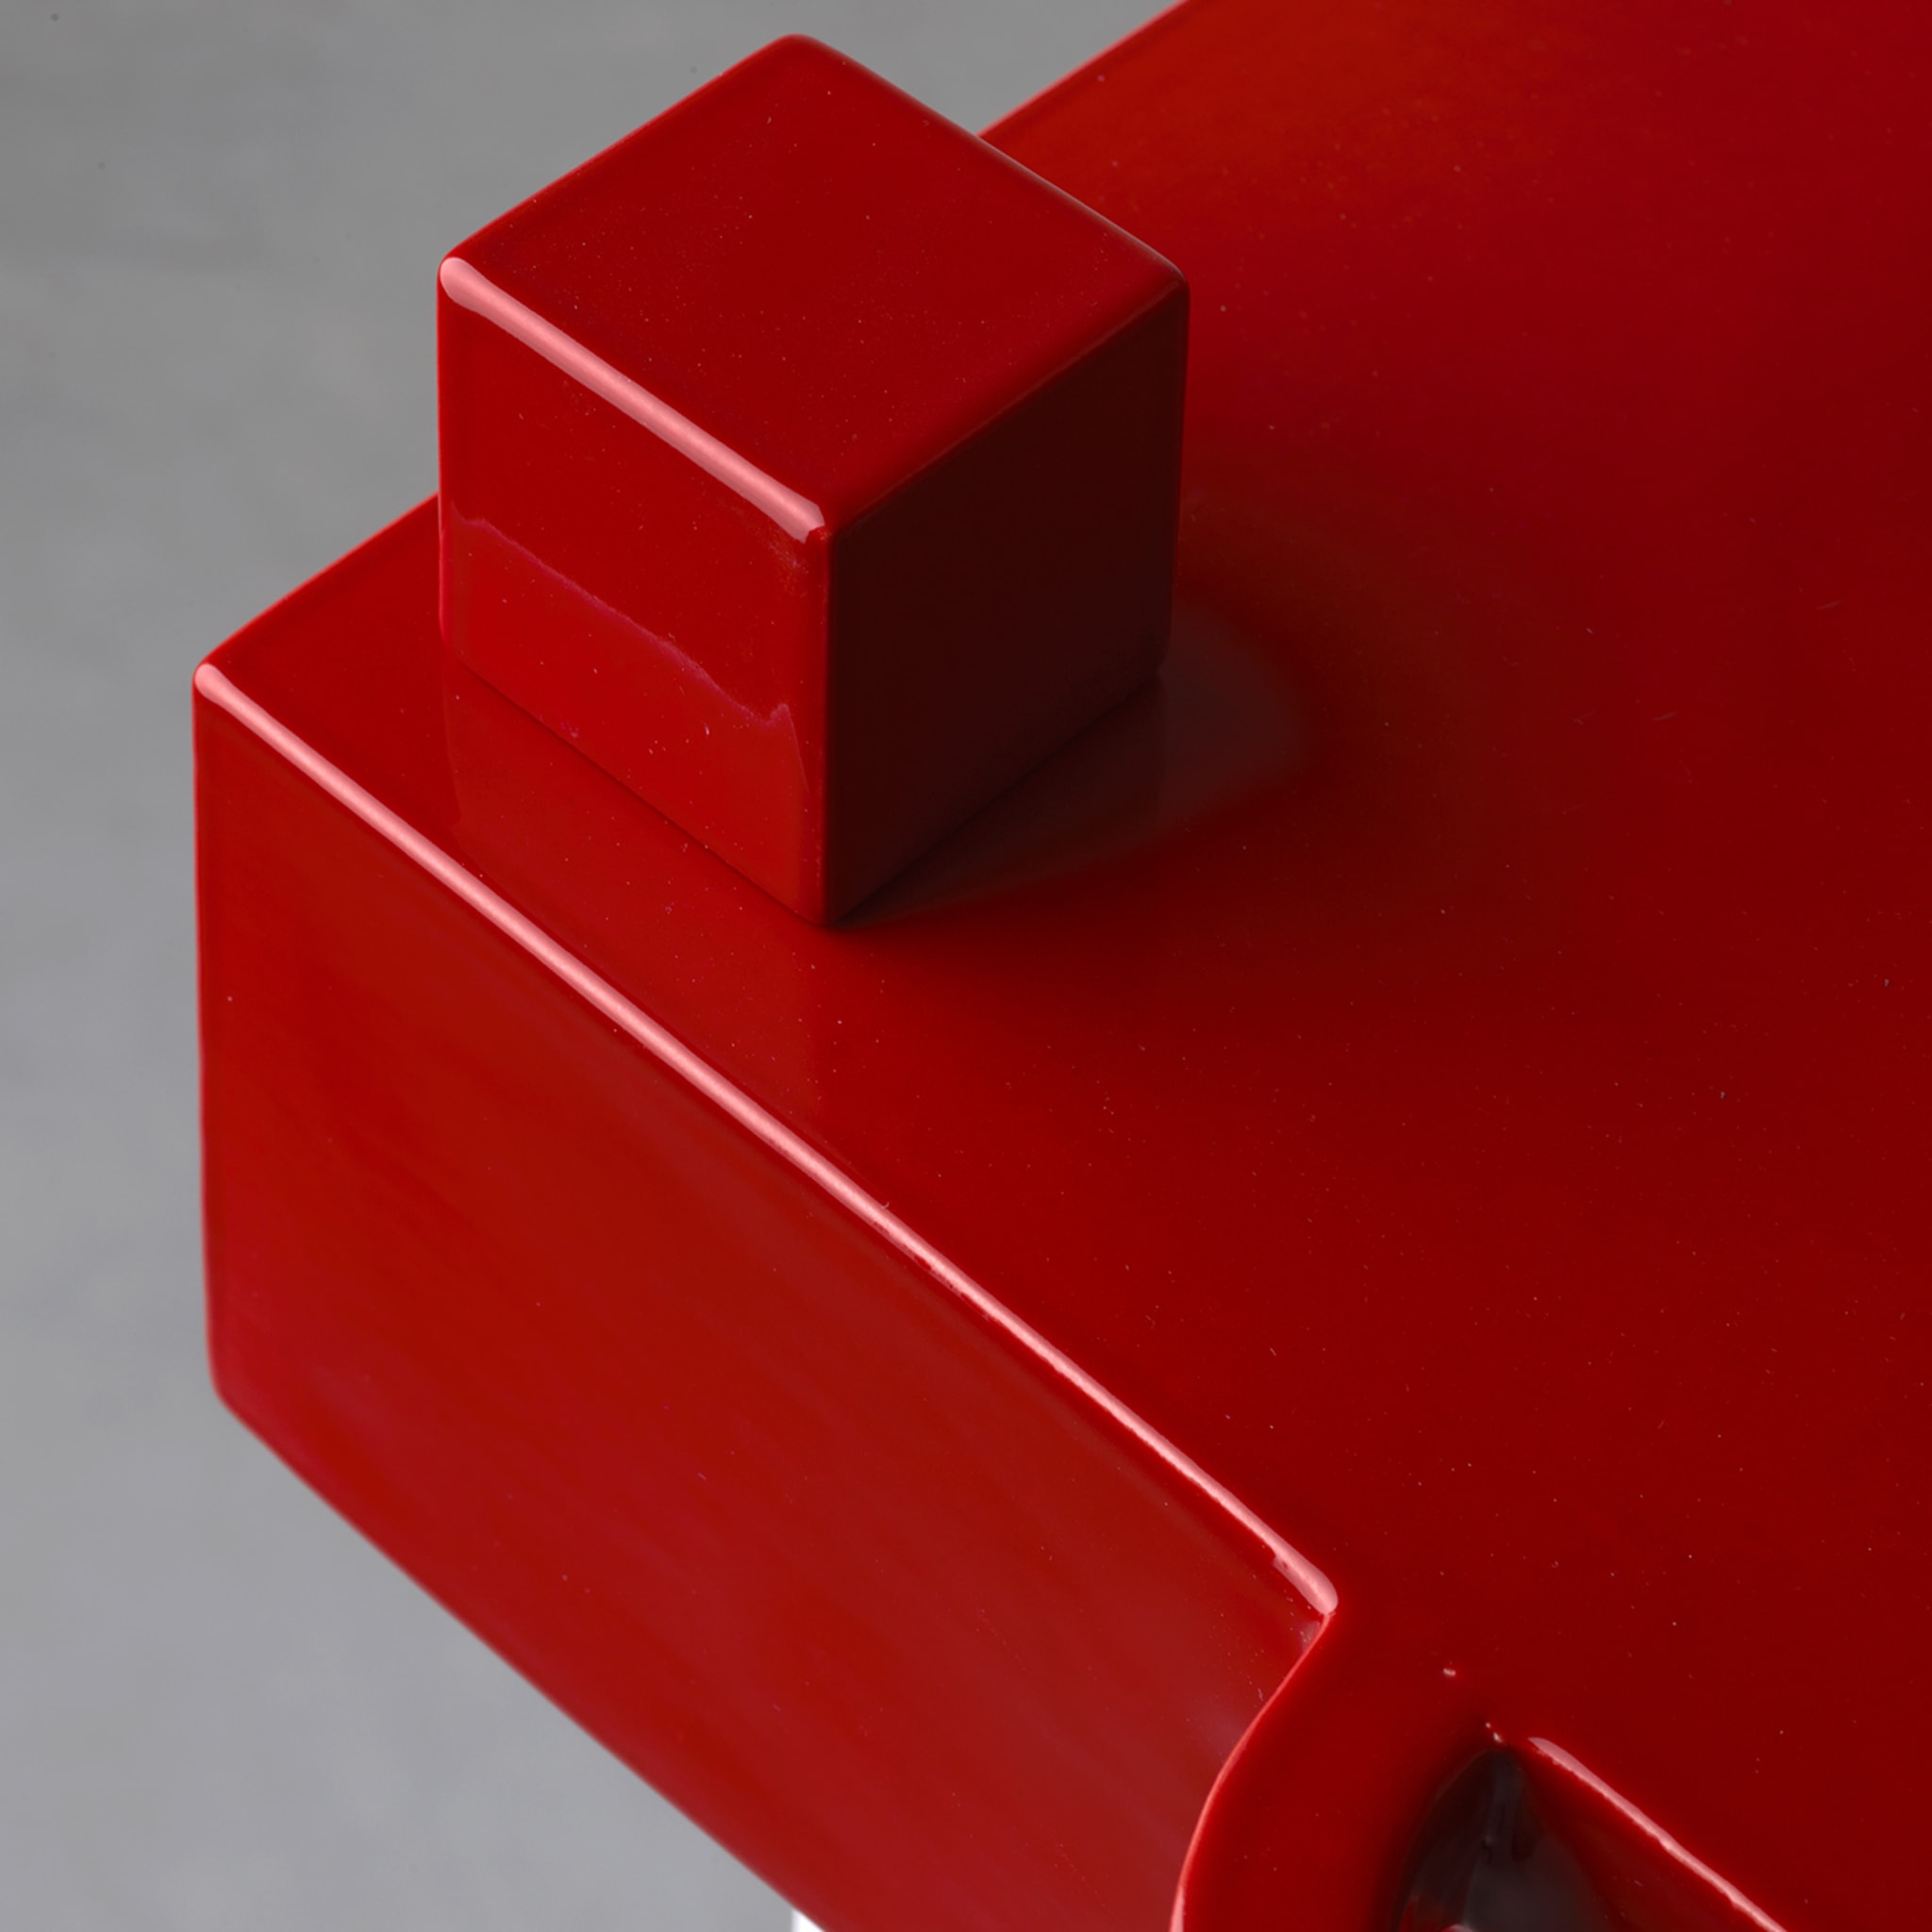 Paesaggi Square Red Sculpture by Nathalie Du Pasquier - Alternative view 1